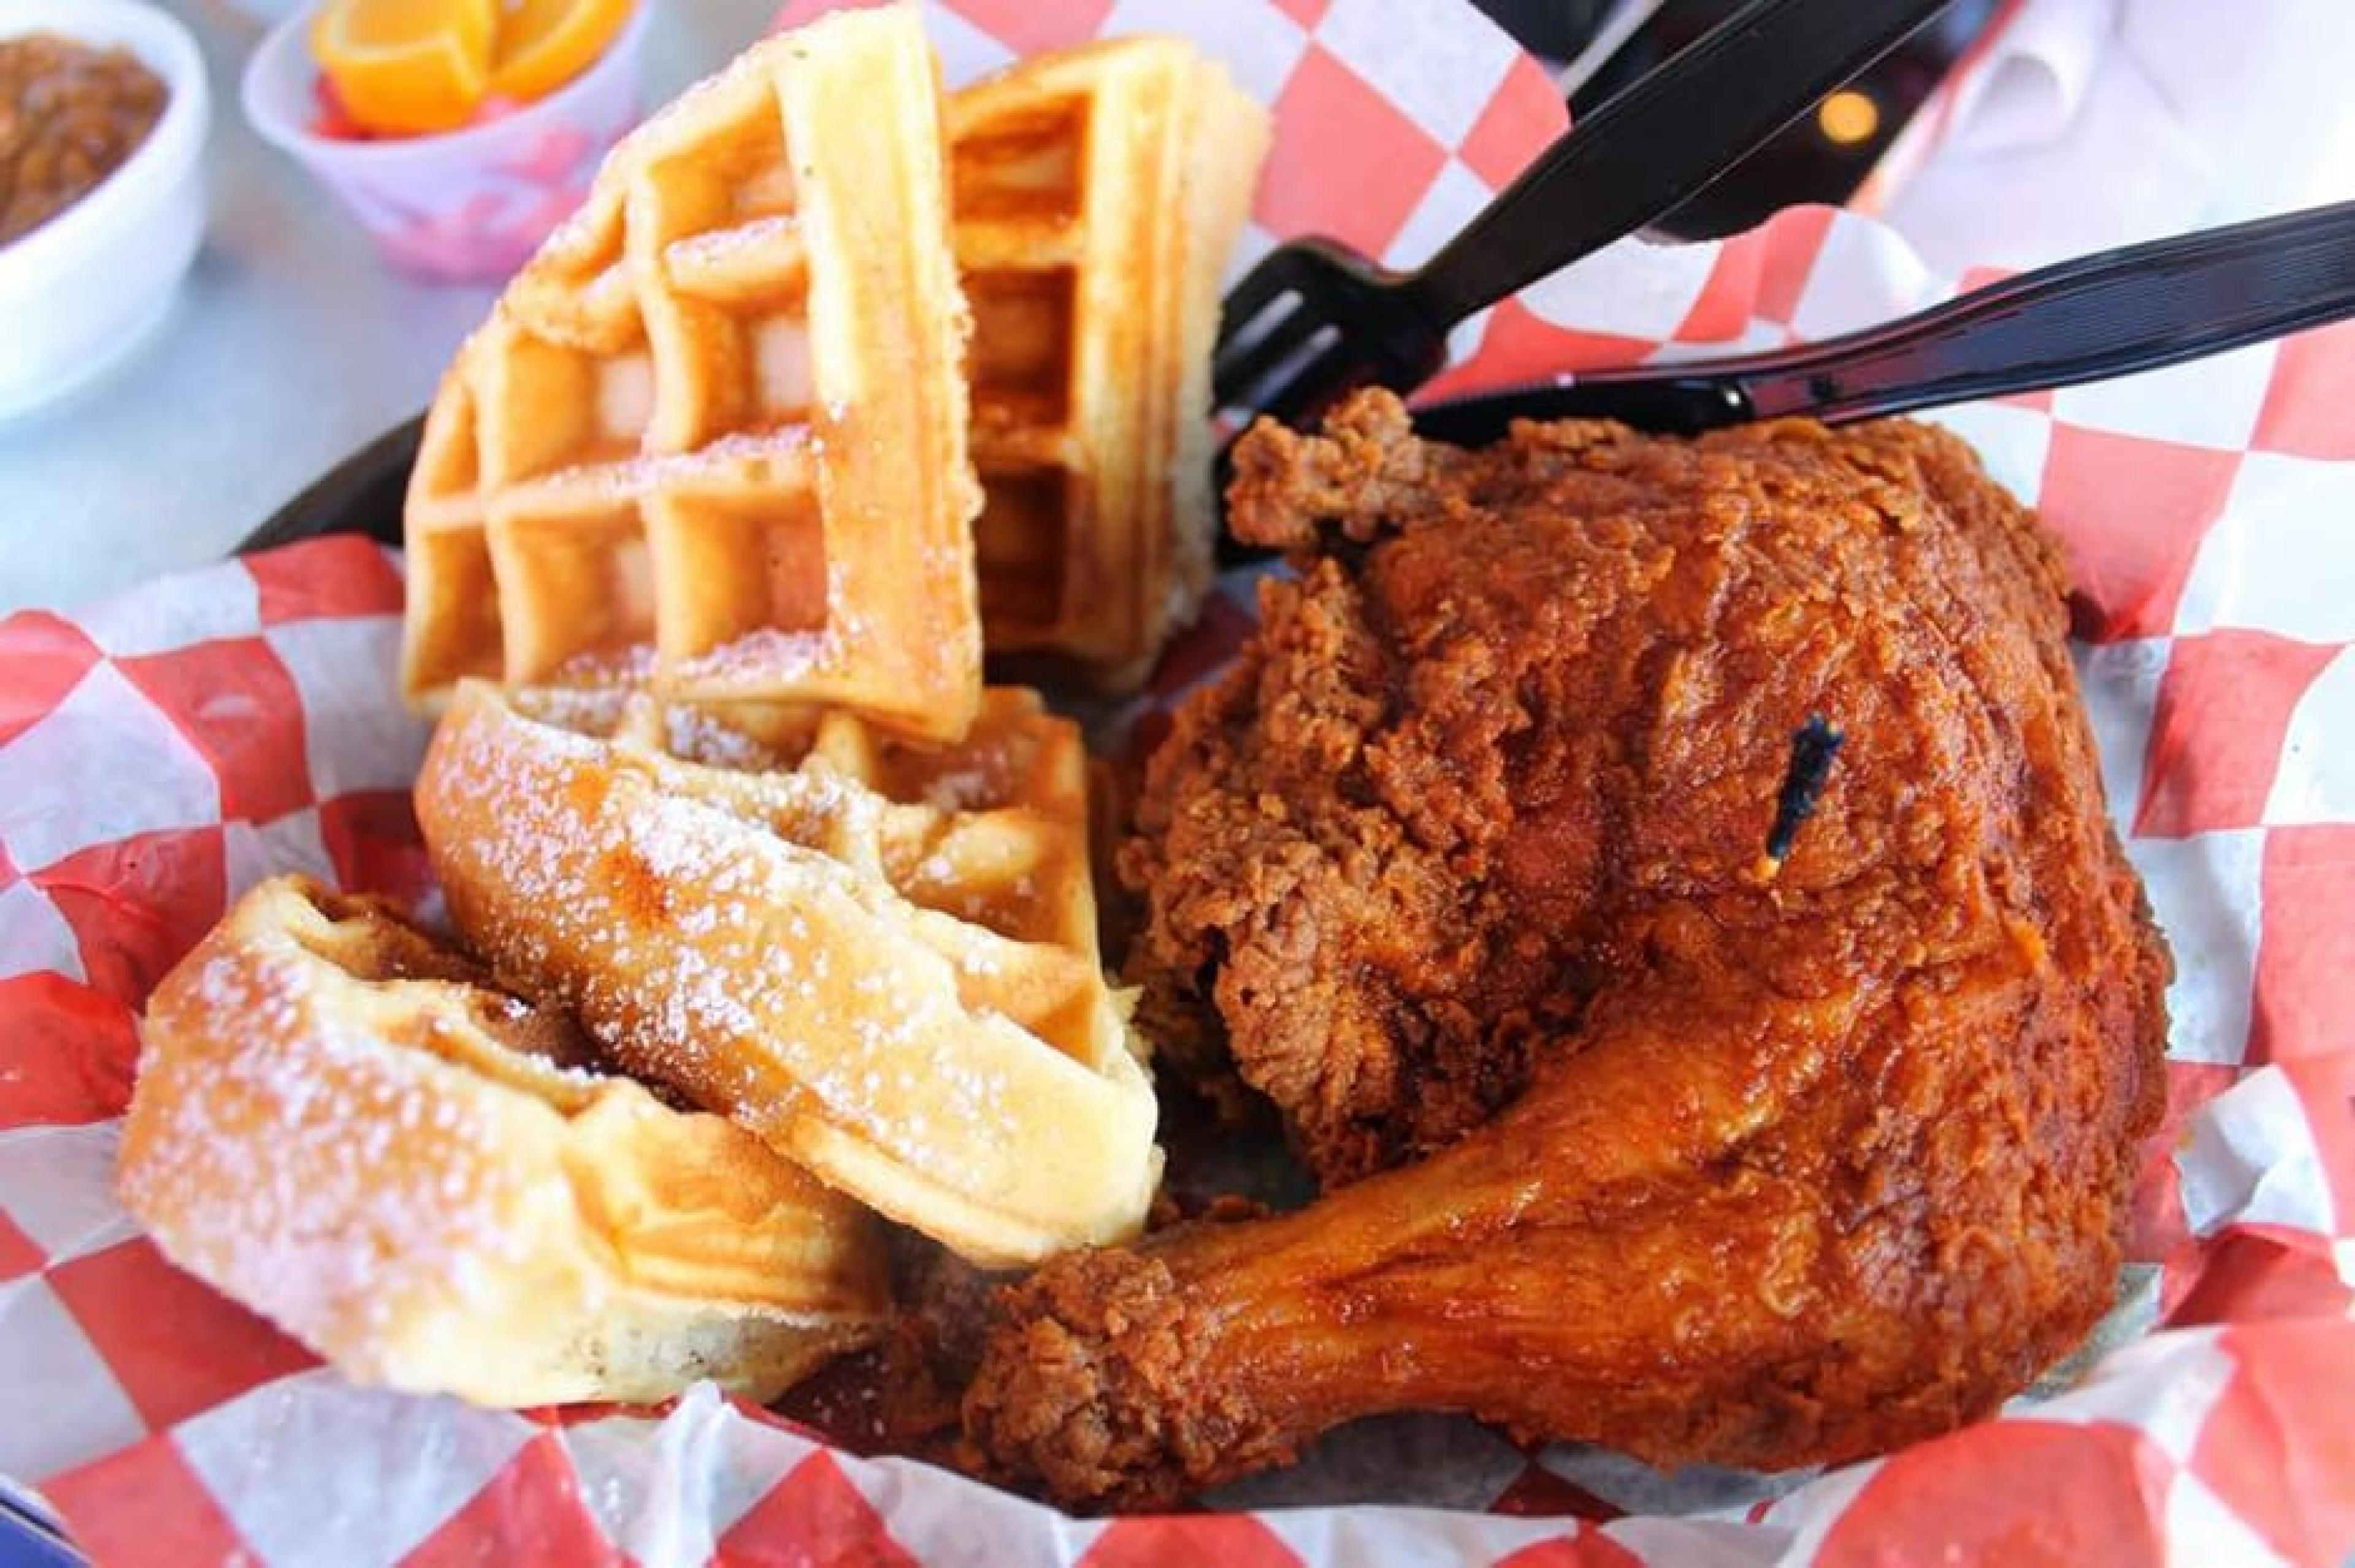 Food at Hattie B’s Hot Chicken, Nashville, American South